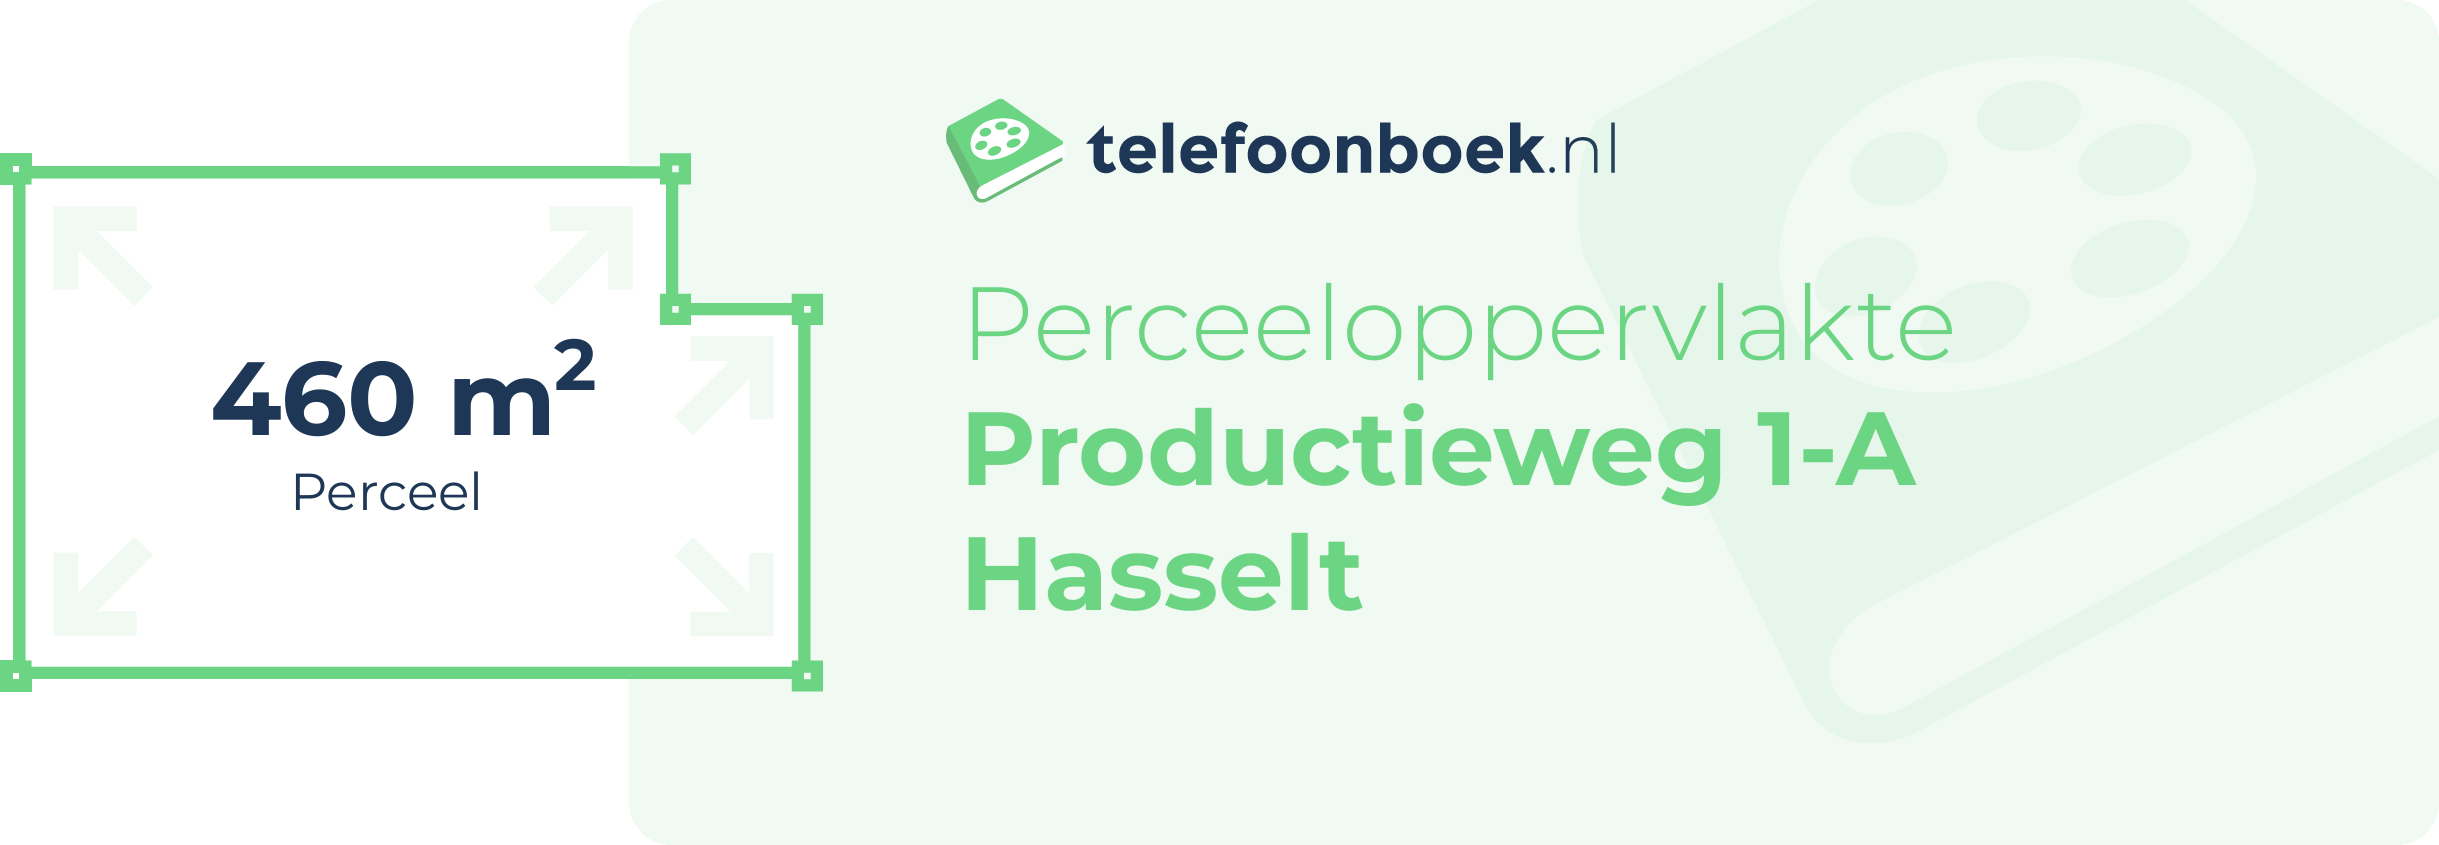 Perceeloppervlakte Productieweg 1-A Hasselt